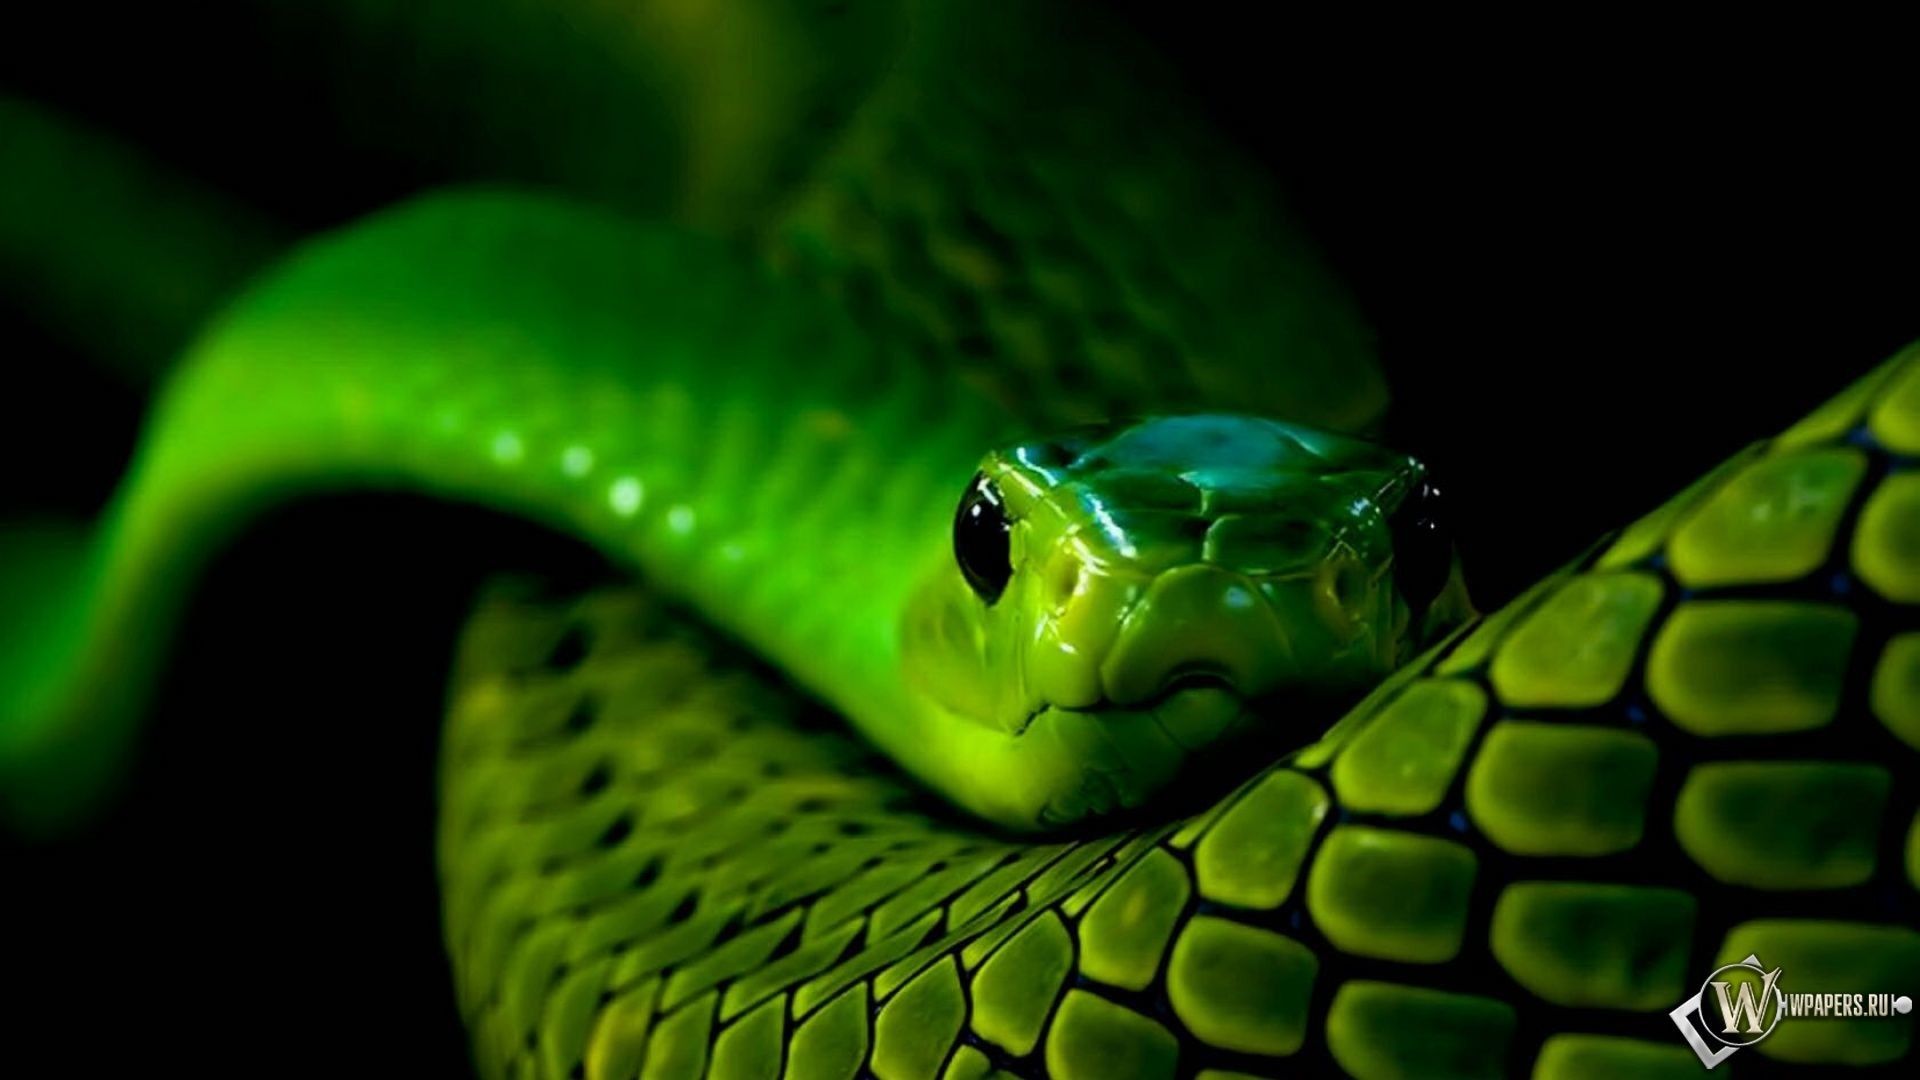 Wallpaper Python, Singapore, zoo, Emerald, Green, snake, eyes, close-up,  Animals #10164